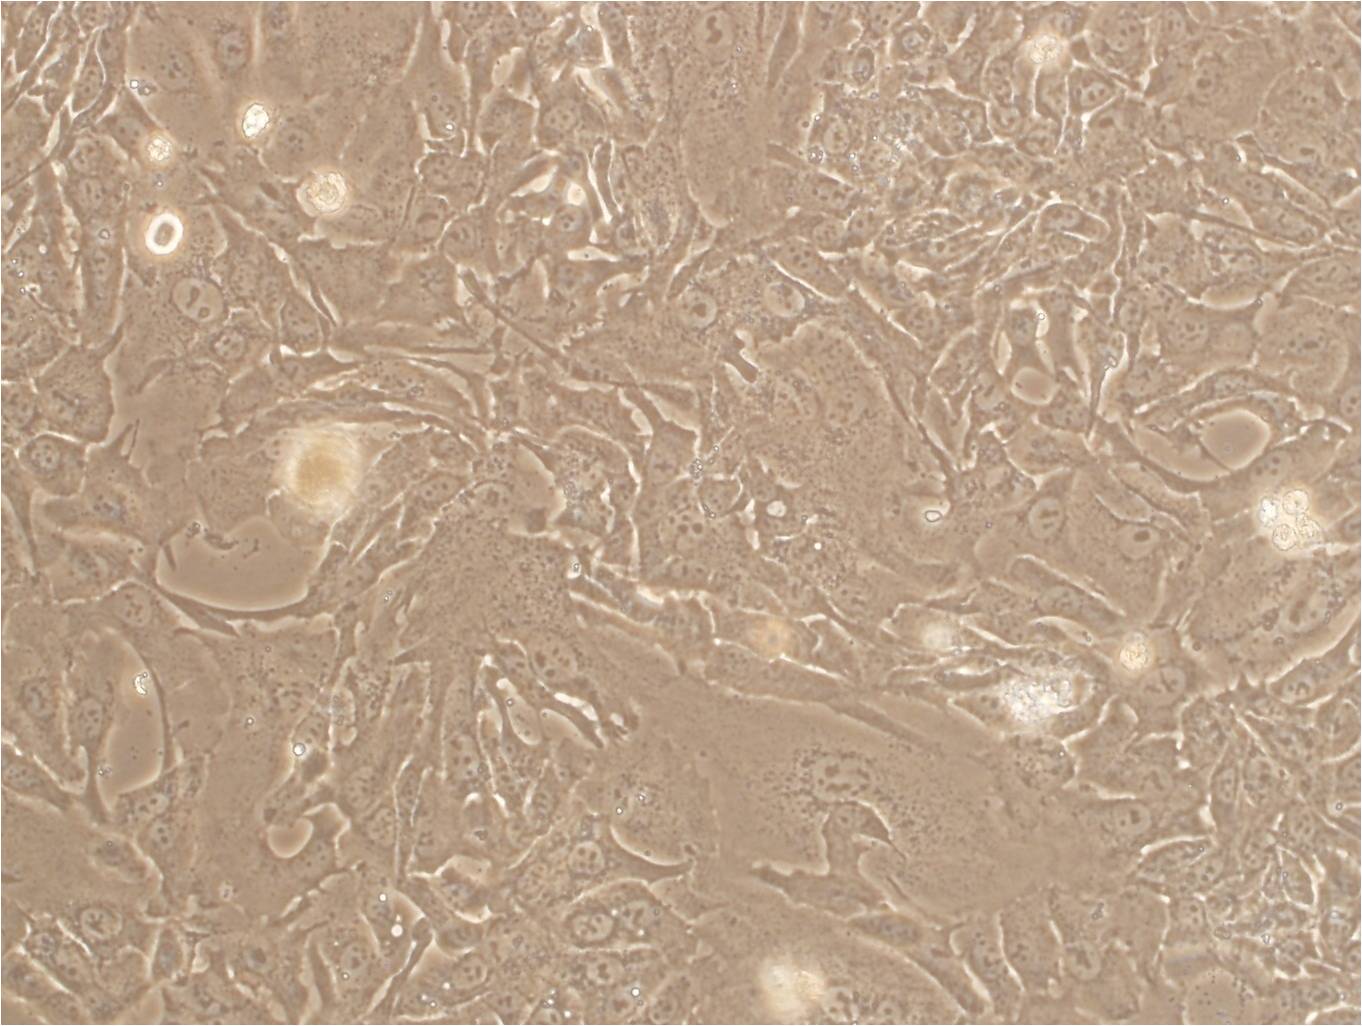 KNS-62 cell line人肺支气管鳞状细胞癌细胞系,KNS-62 cell line